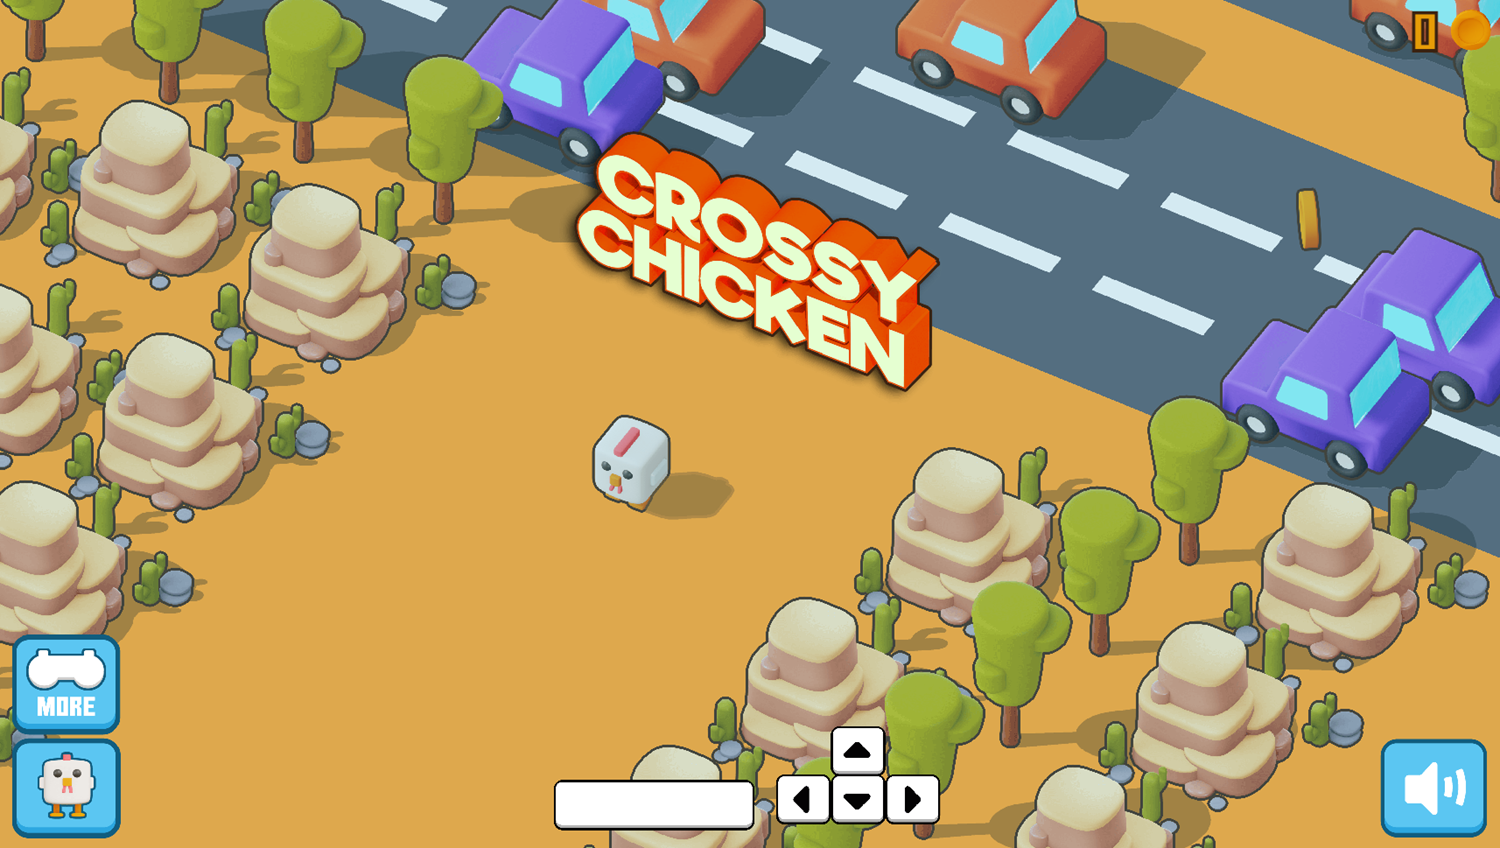 Crossy Chicken Game Welcome Screen Screenshot.